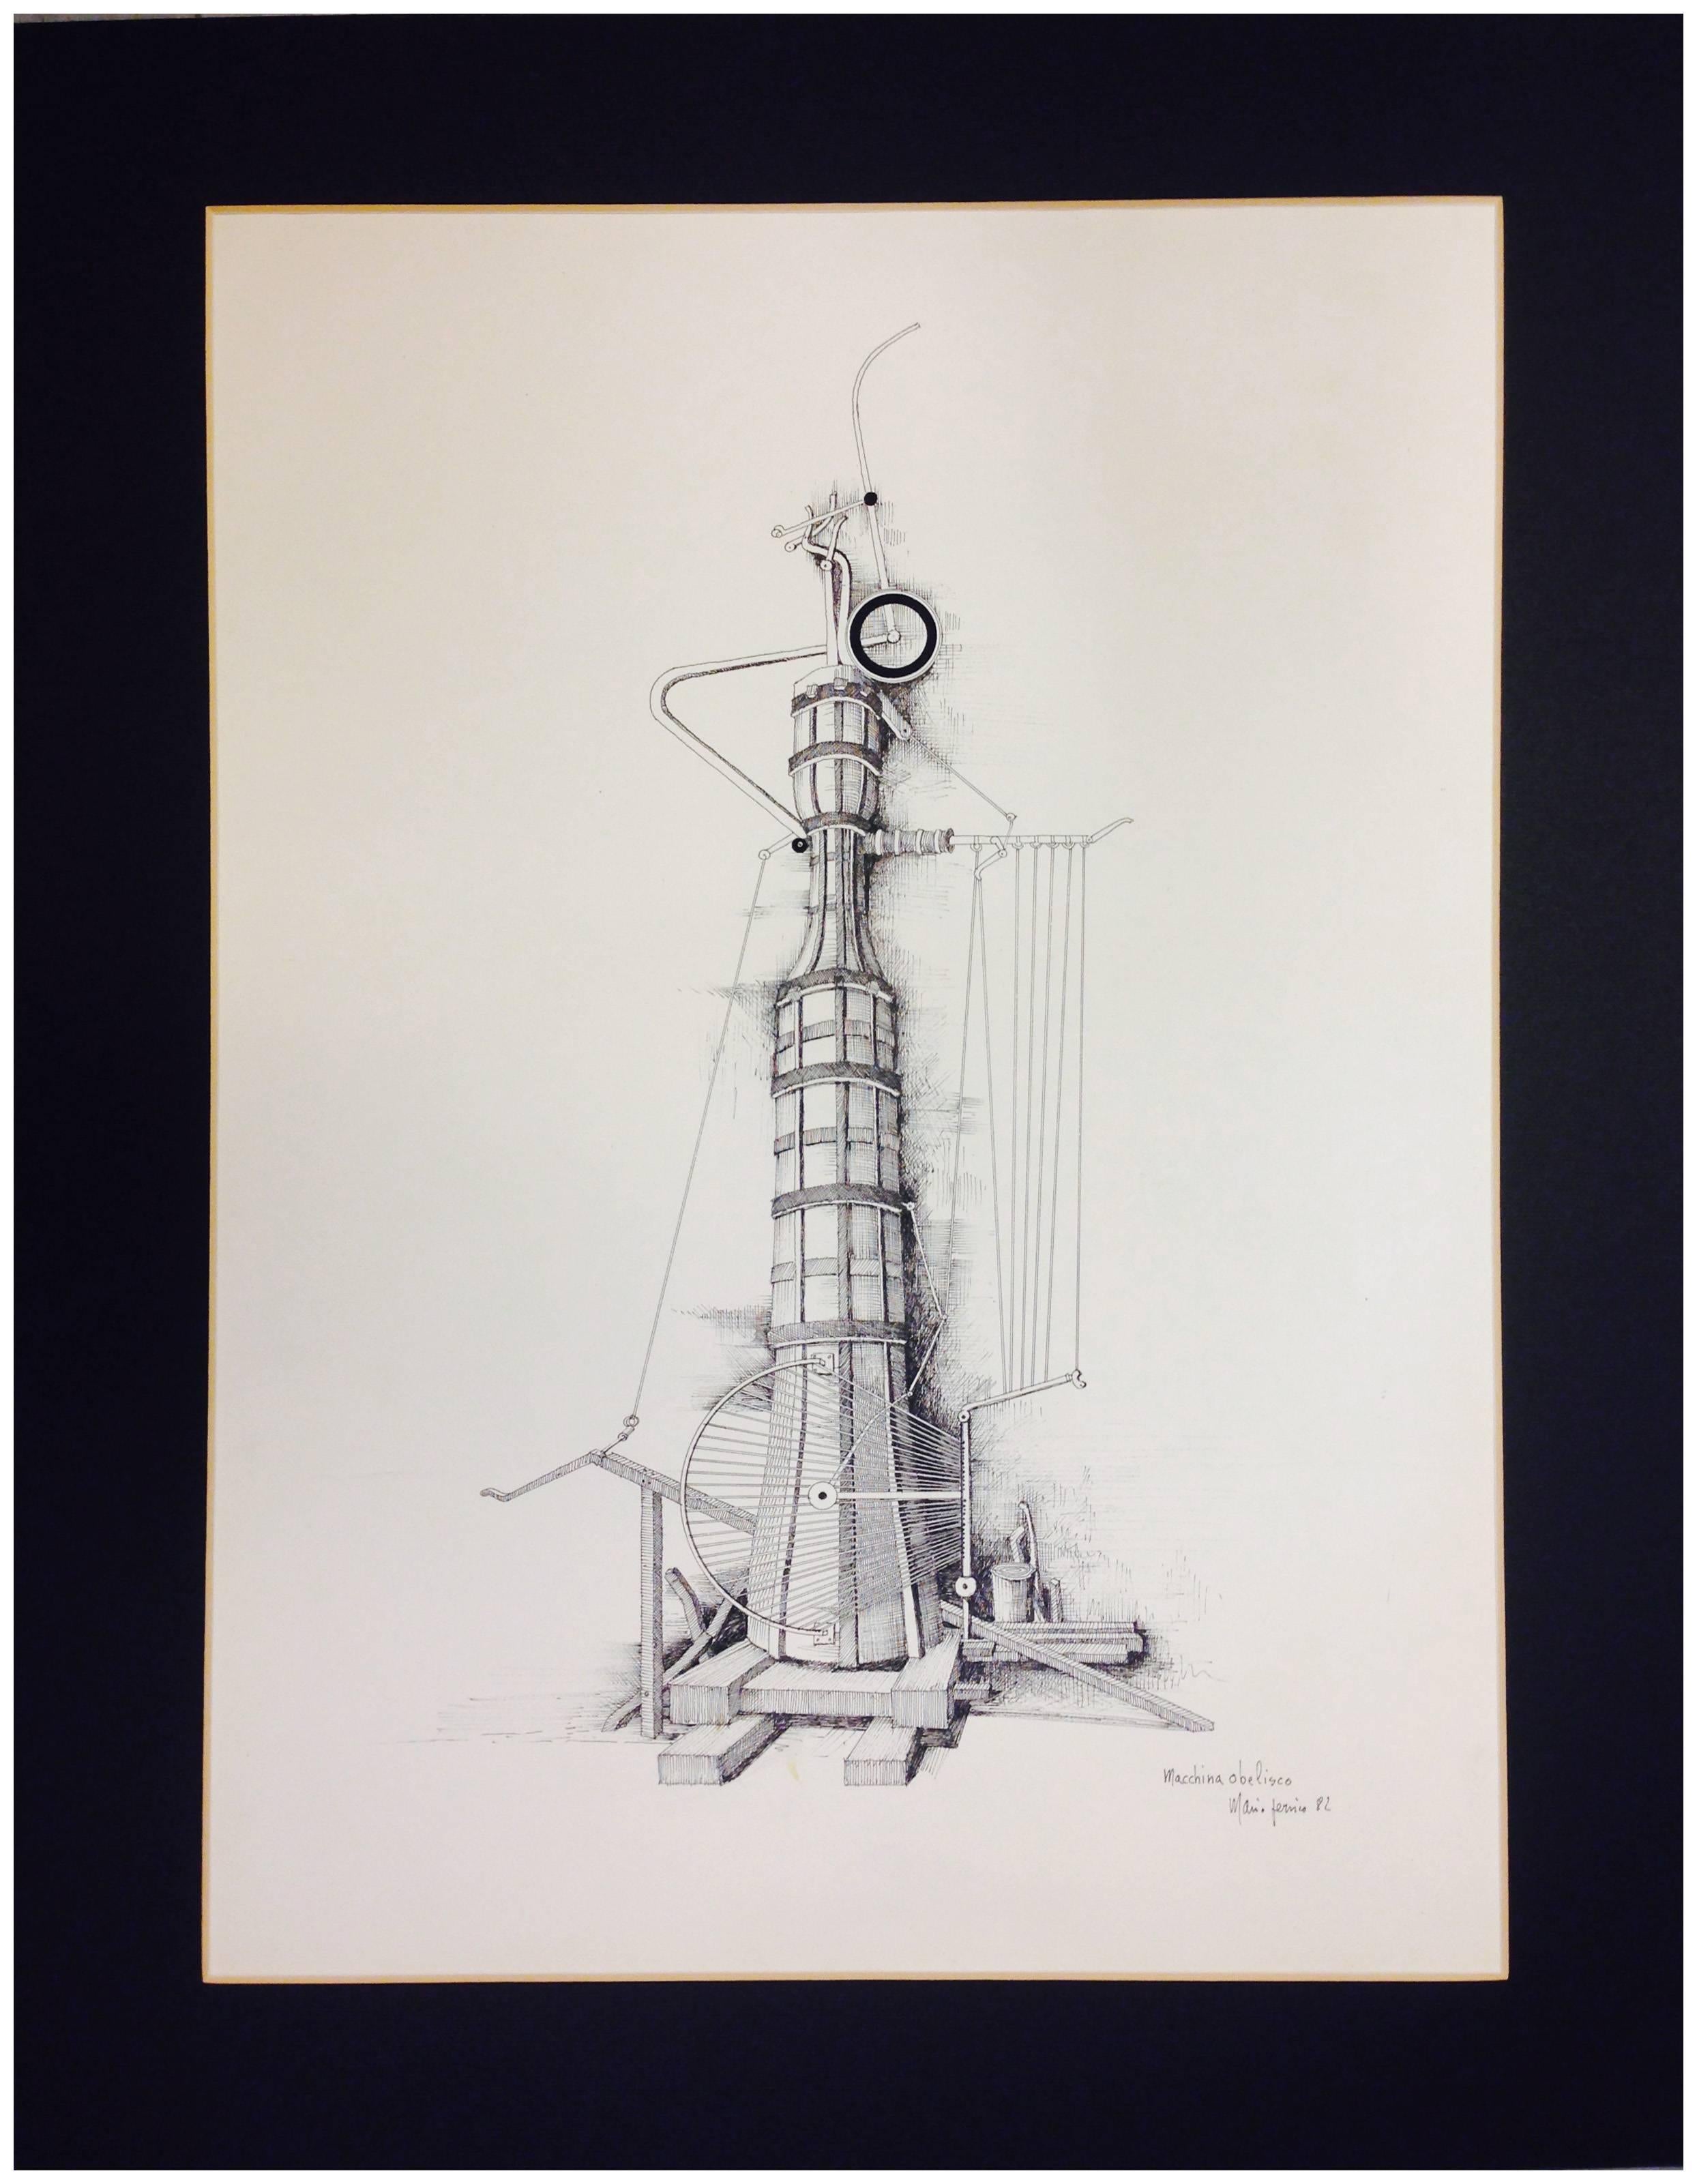 Macchina obelisco -Contemporary - Mario Persico Italia 1982 - China on paper cm. 50 x 35. Black laquered wooden frame cm. 64 x 49